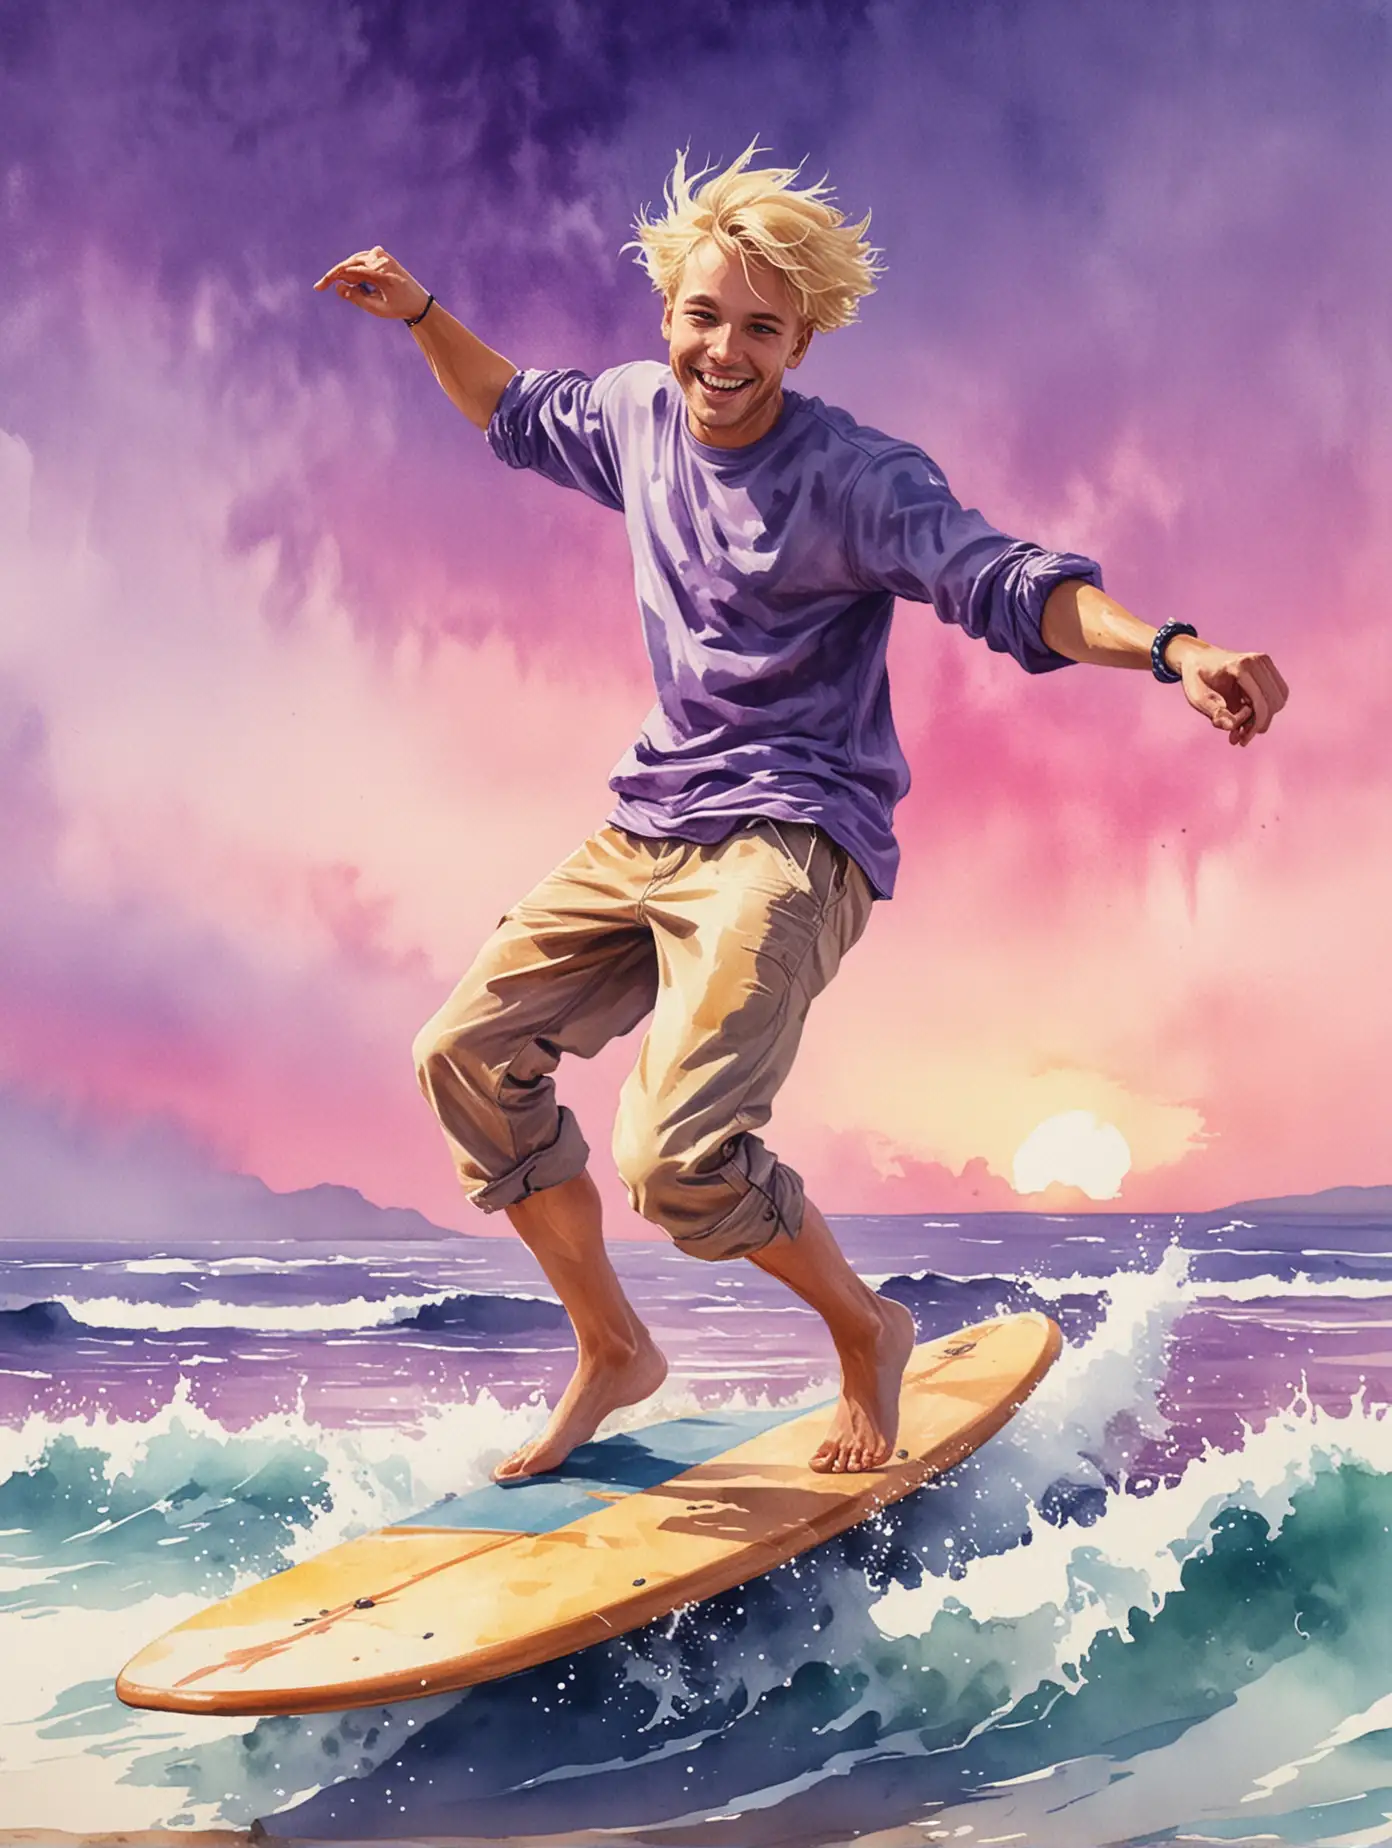 watercolor painting, blonde break dancing man smiling, hip hop dancing on a surfboard, surfing against a purple sky,